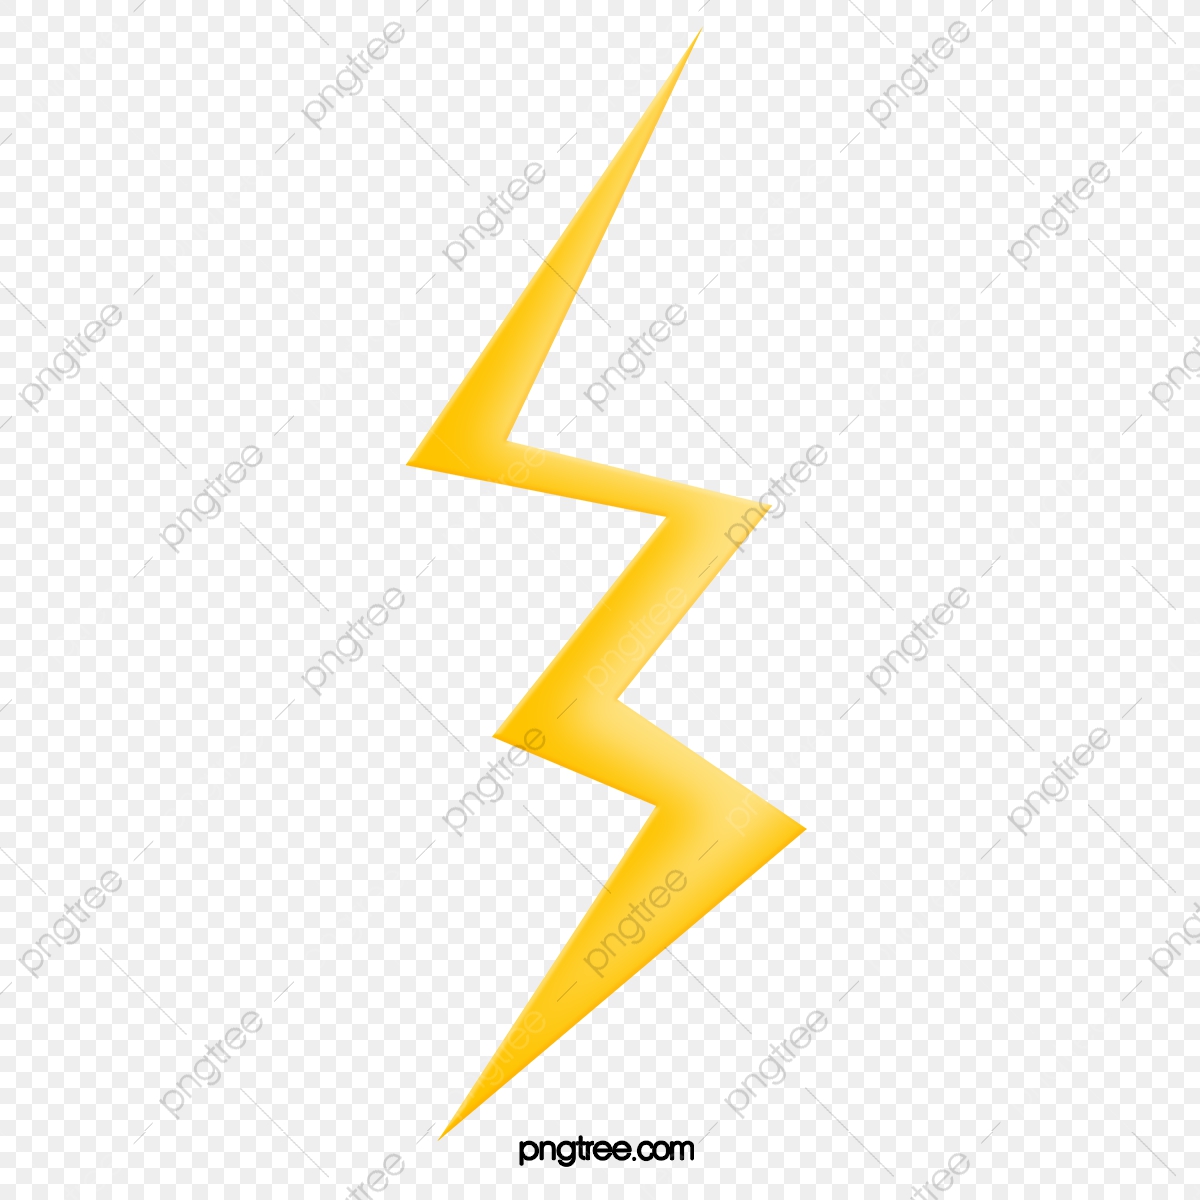 lightning clipart yellow